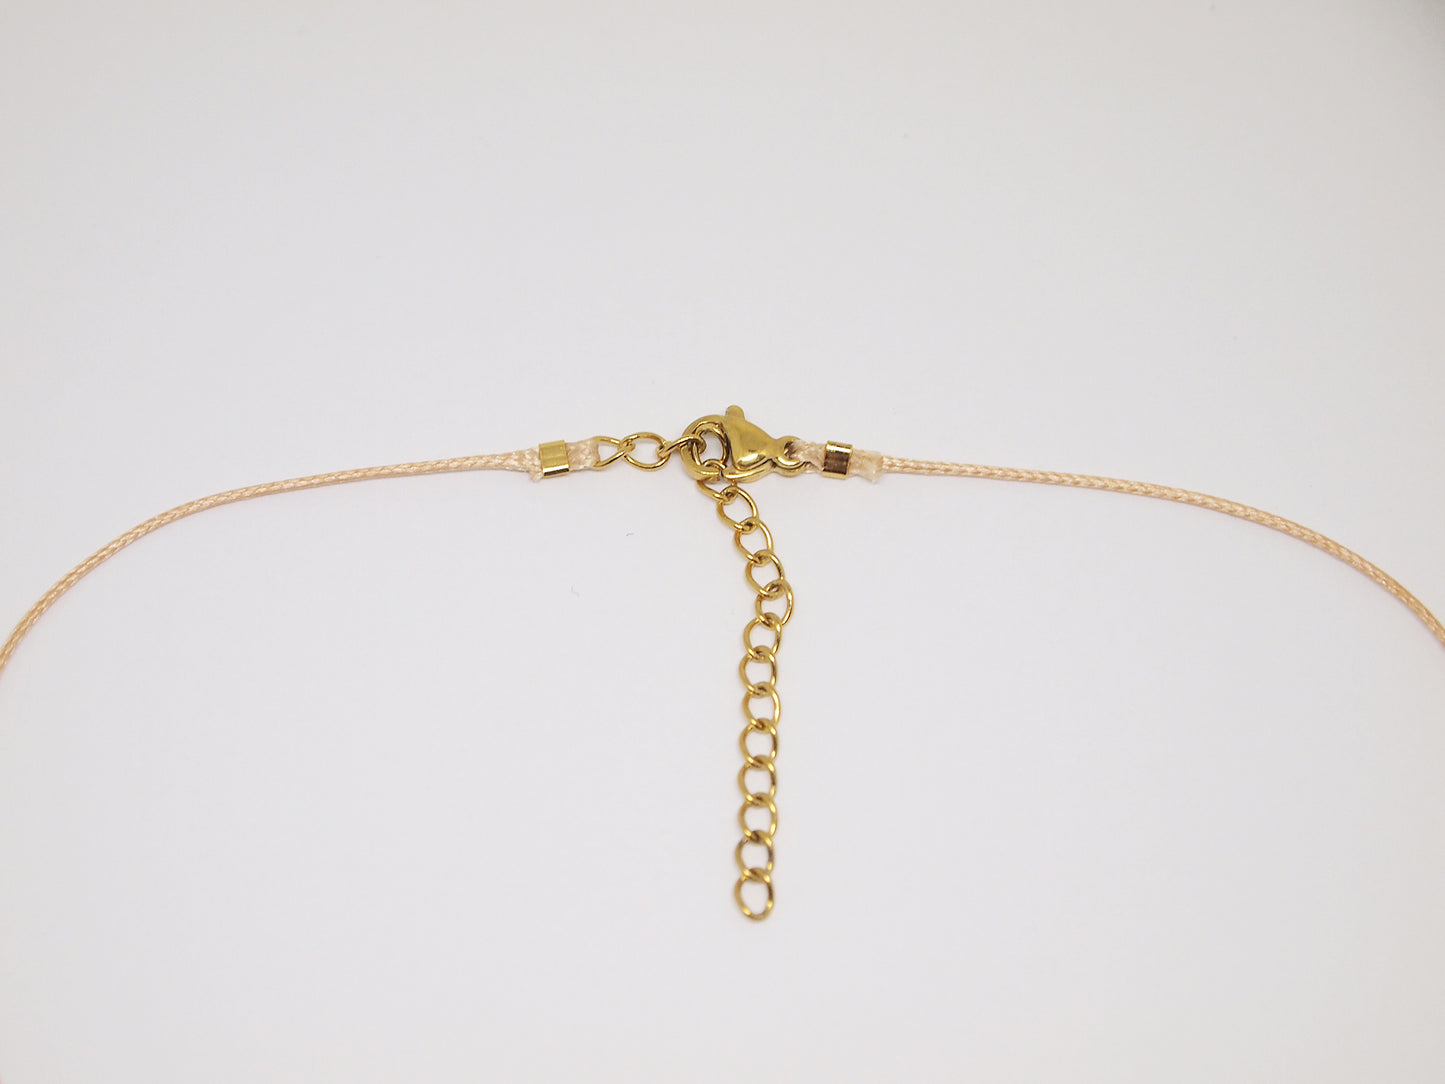 Lapis lazuli beaded cord necklace